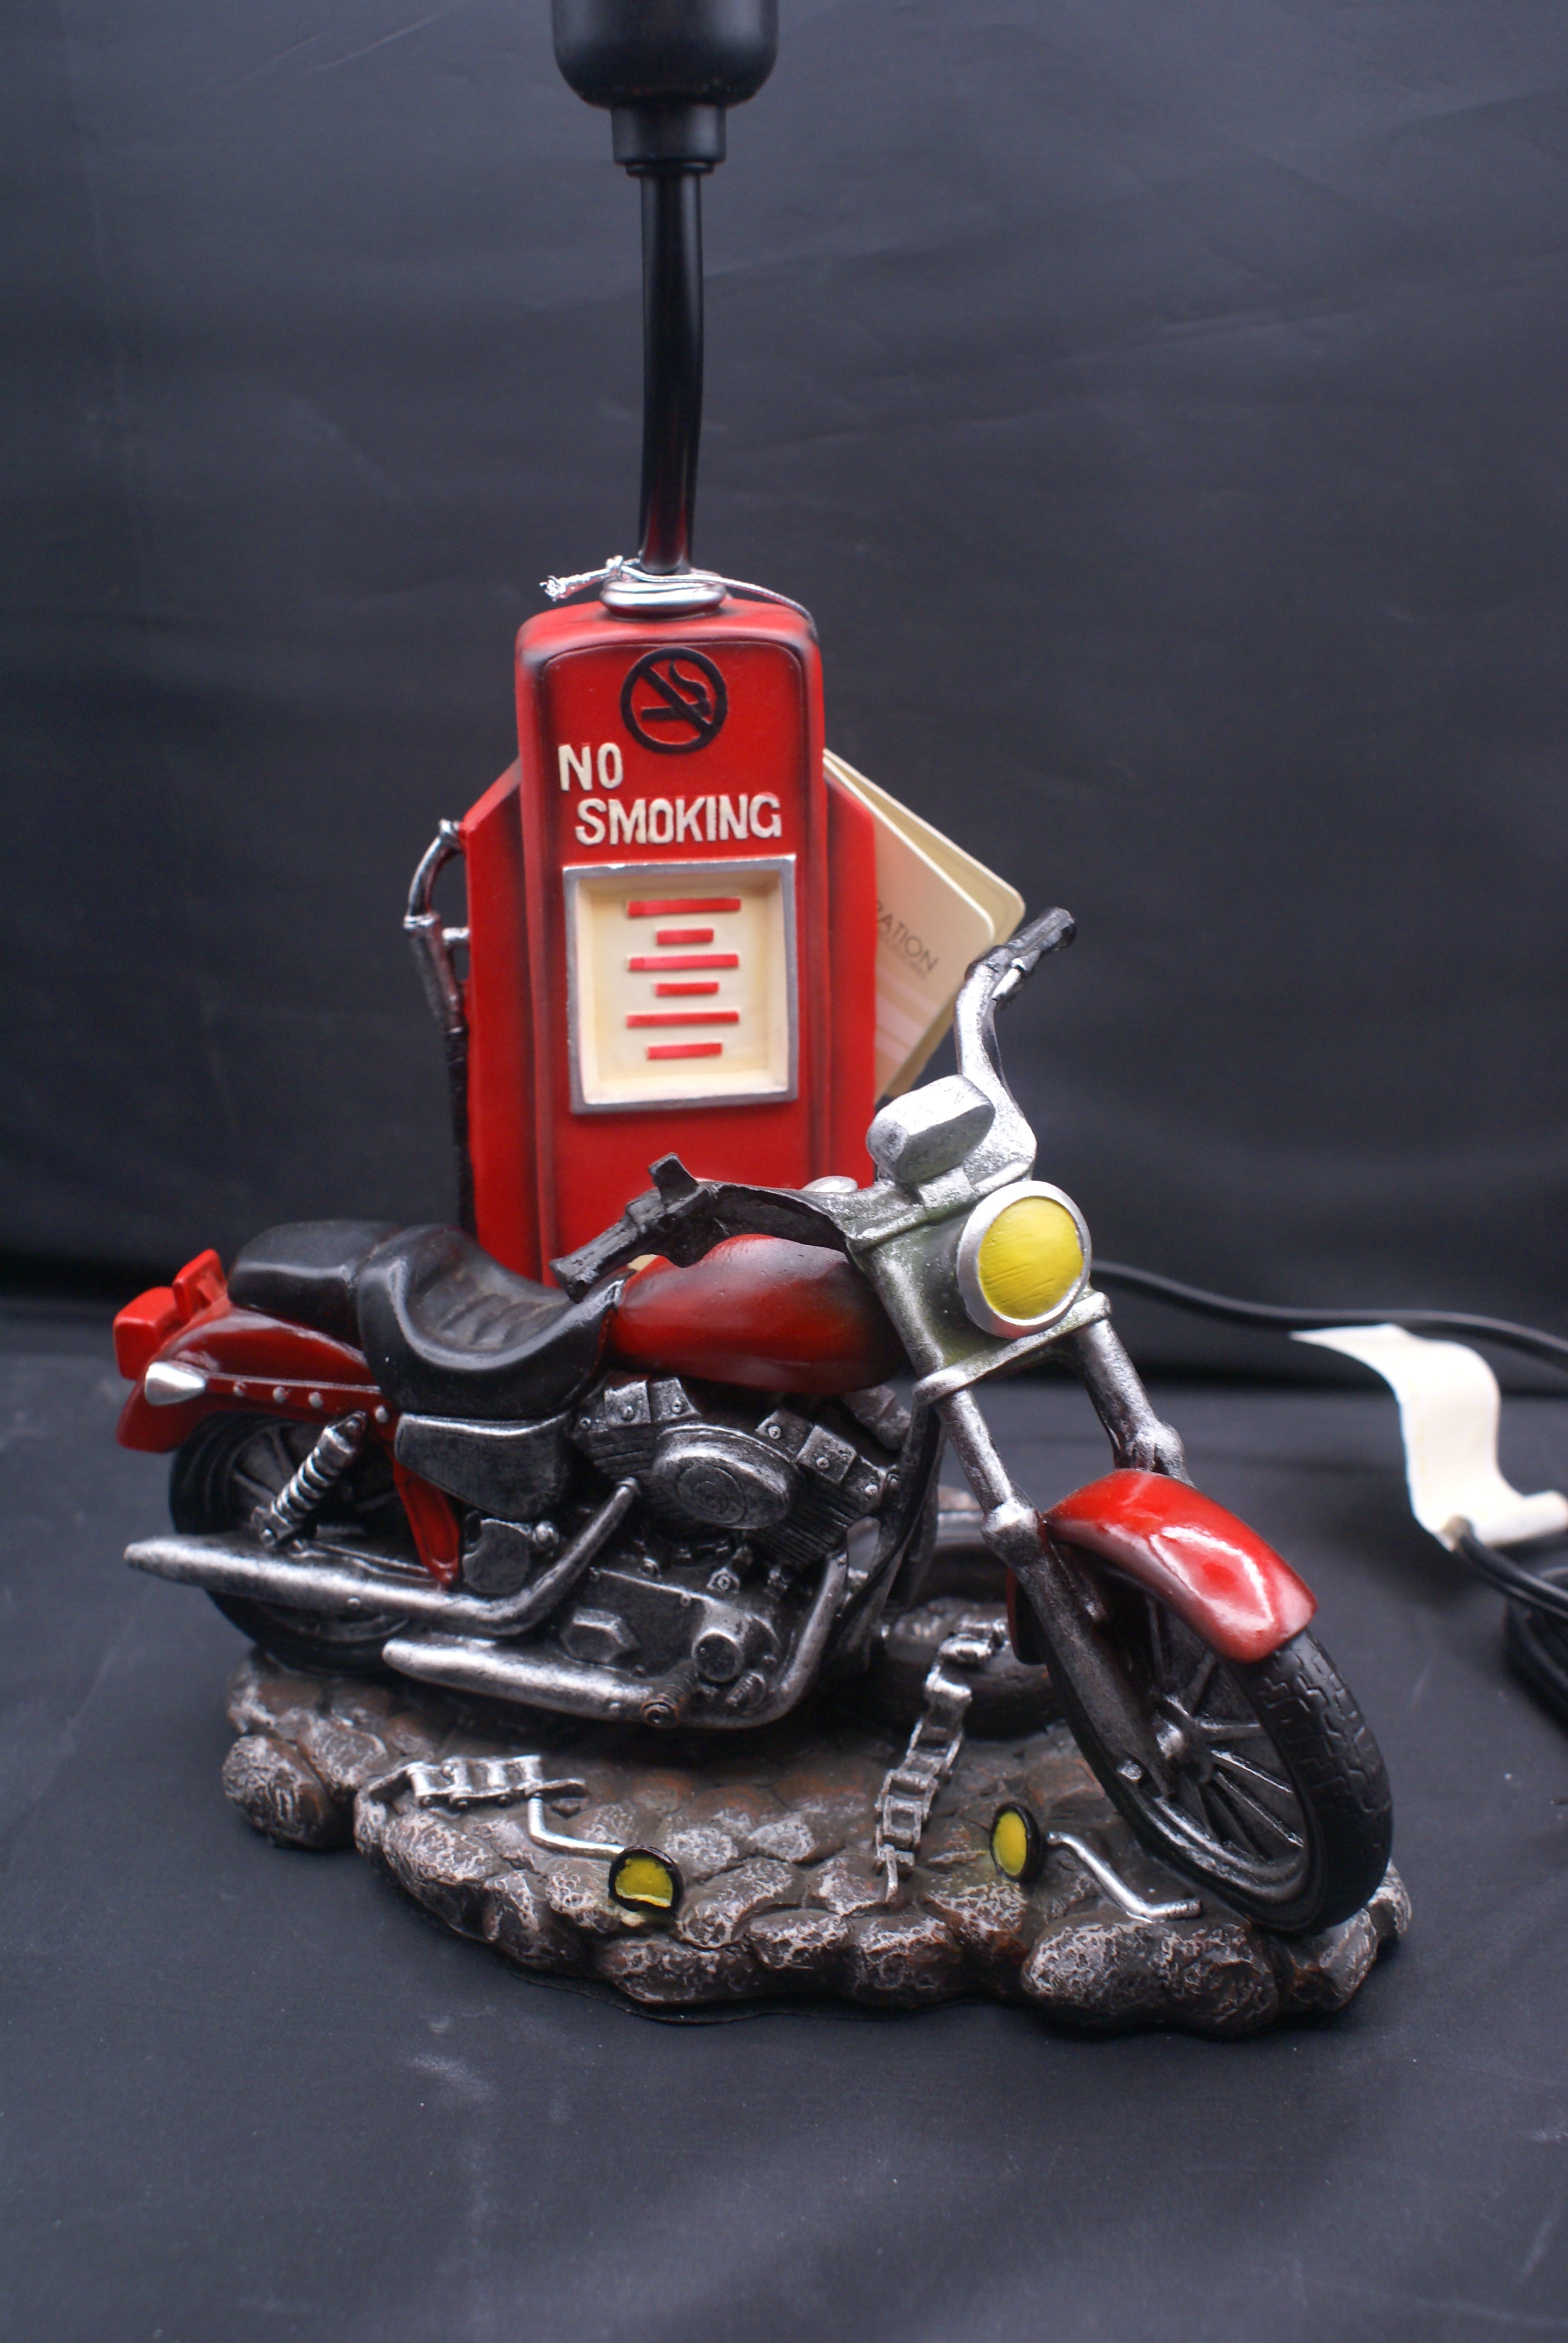 Motorcycle Lamp